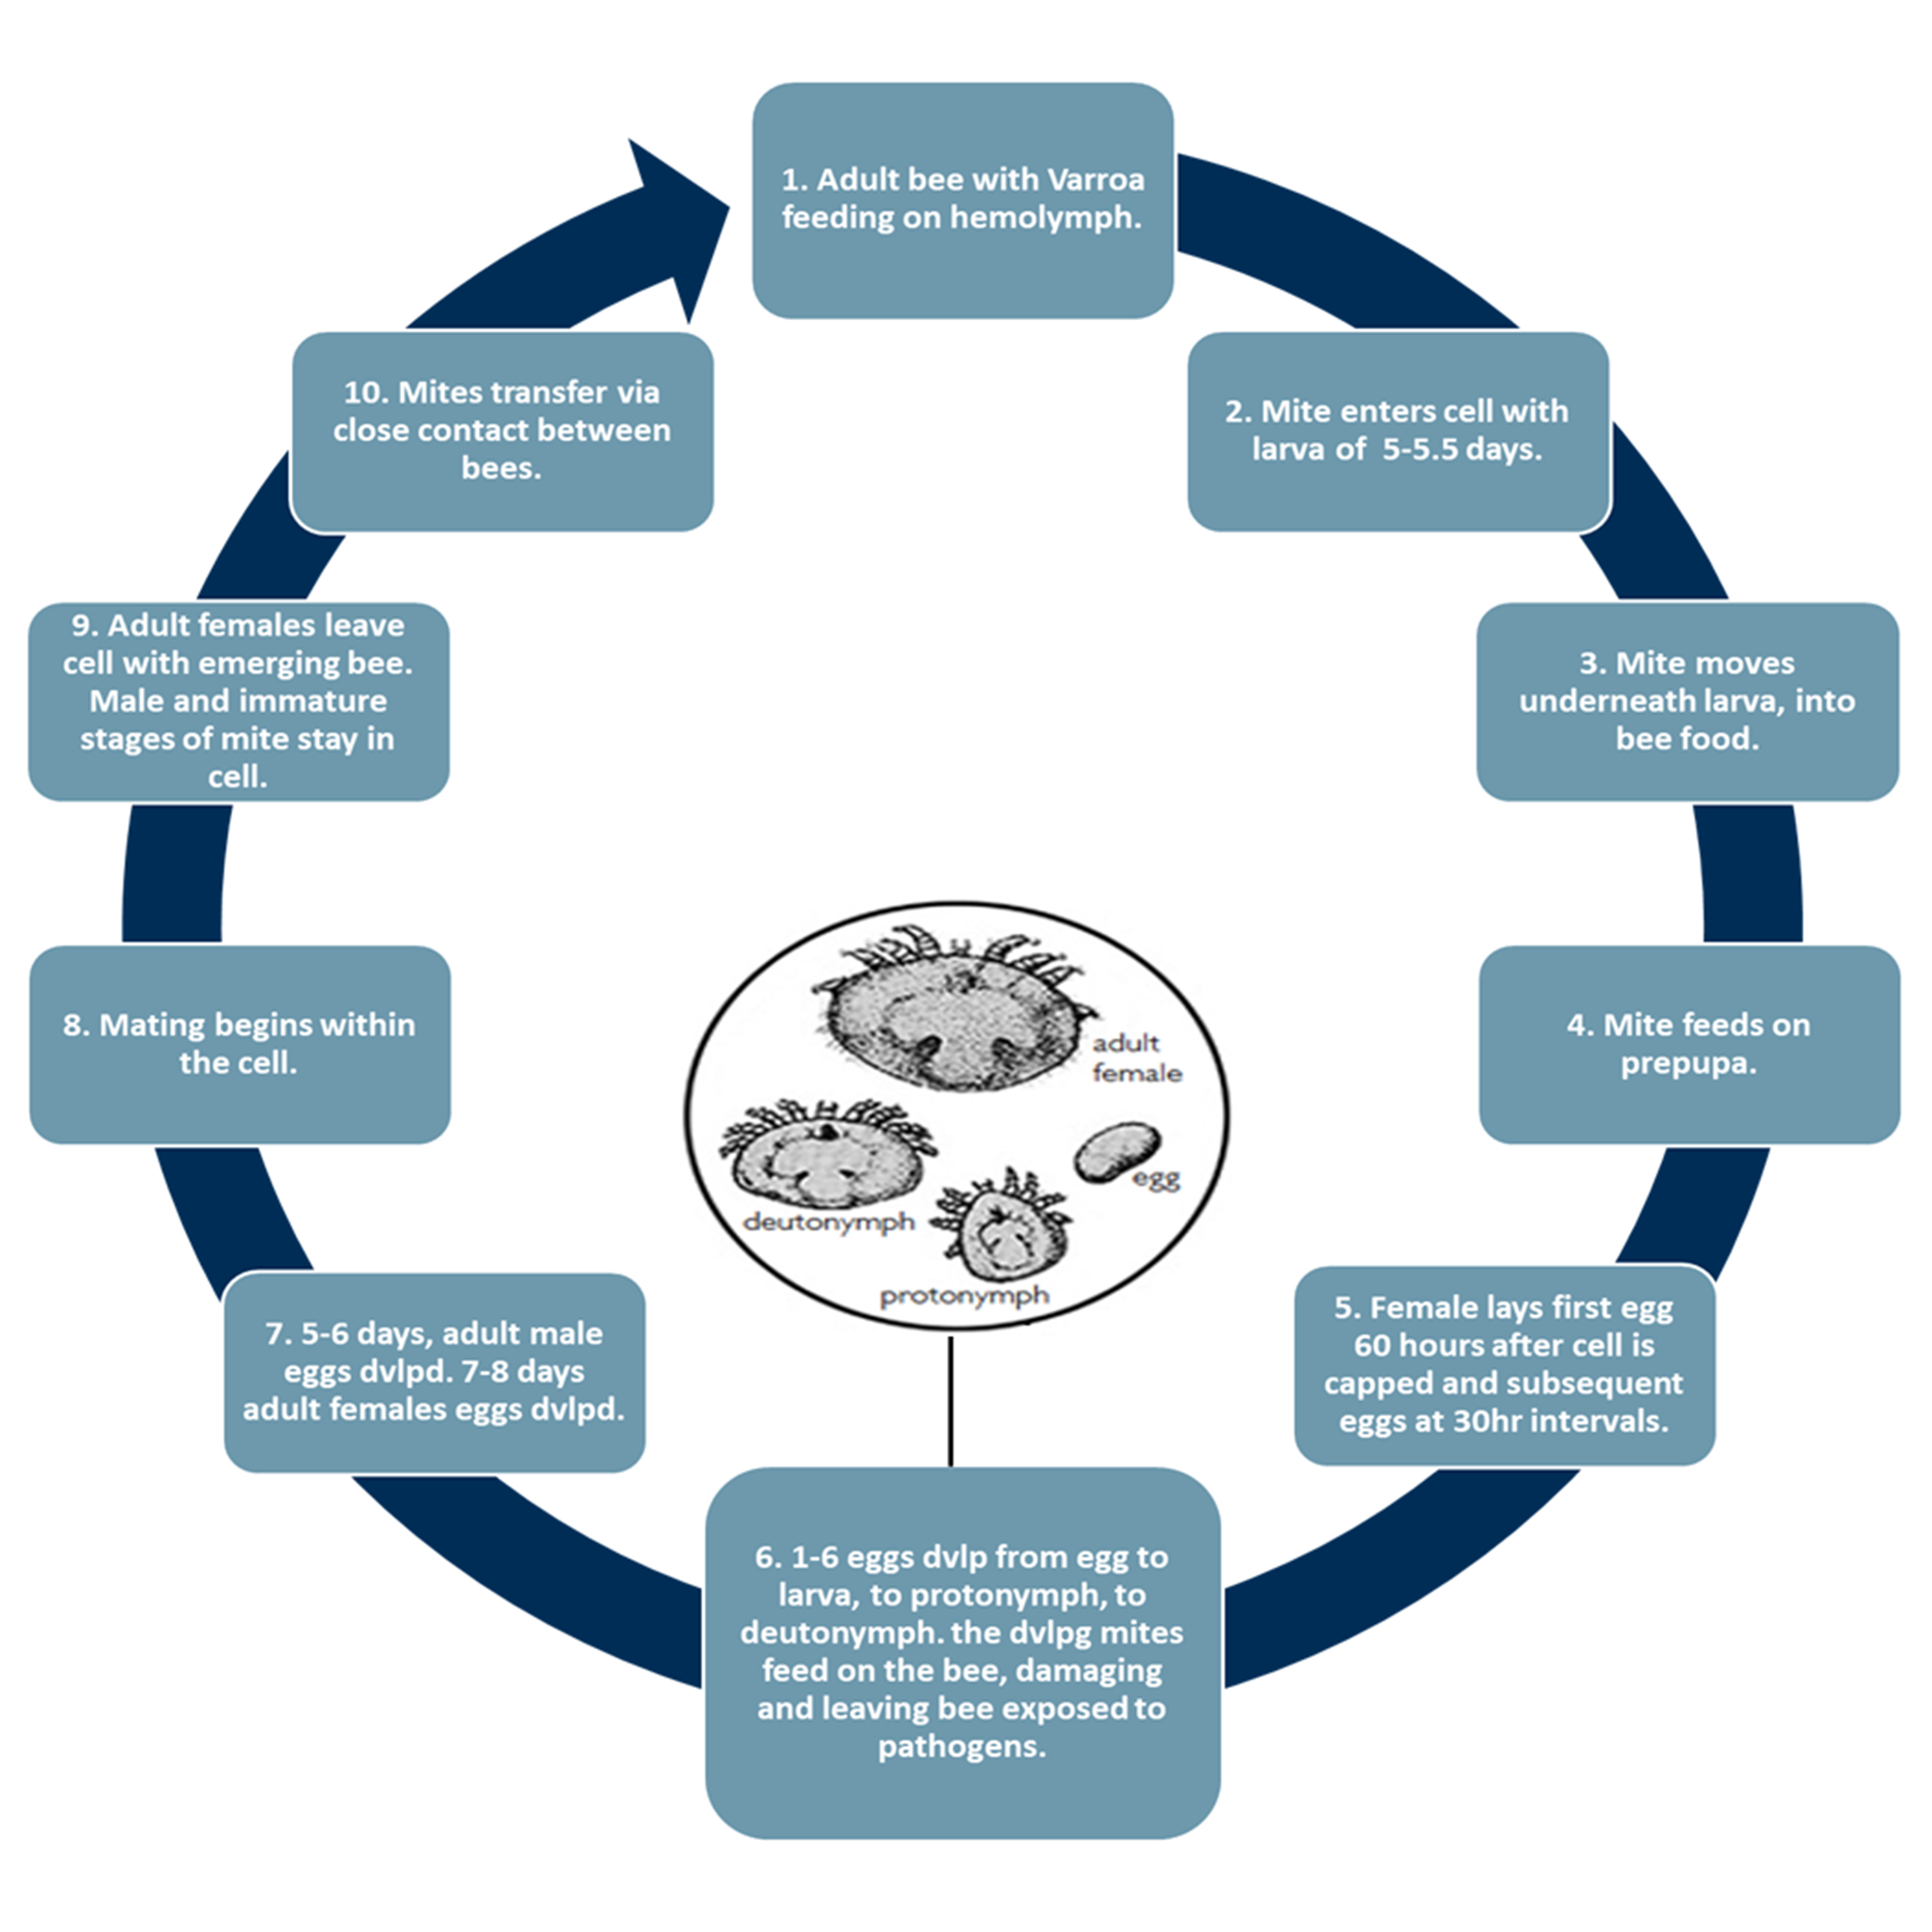 Exhibit 2 – Varroa mite infection cycle